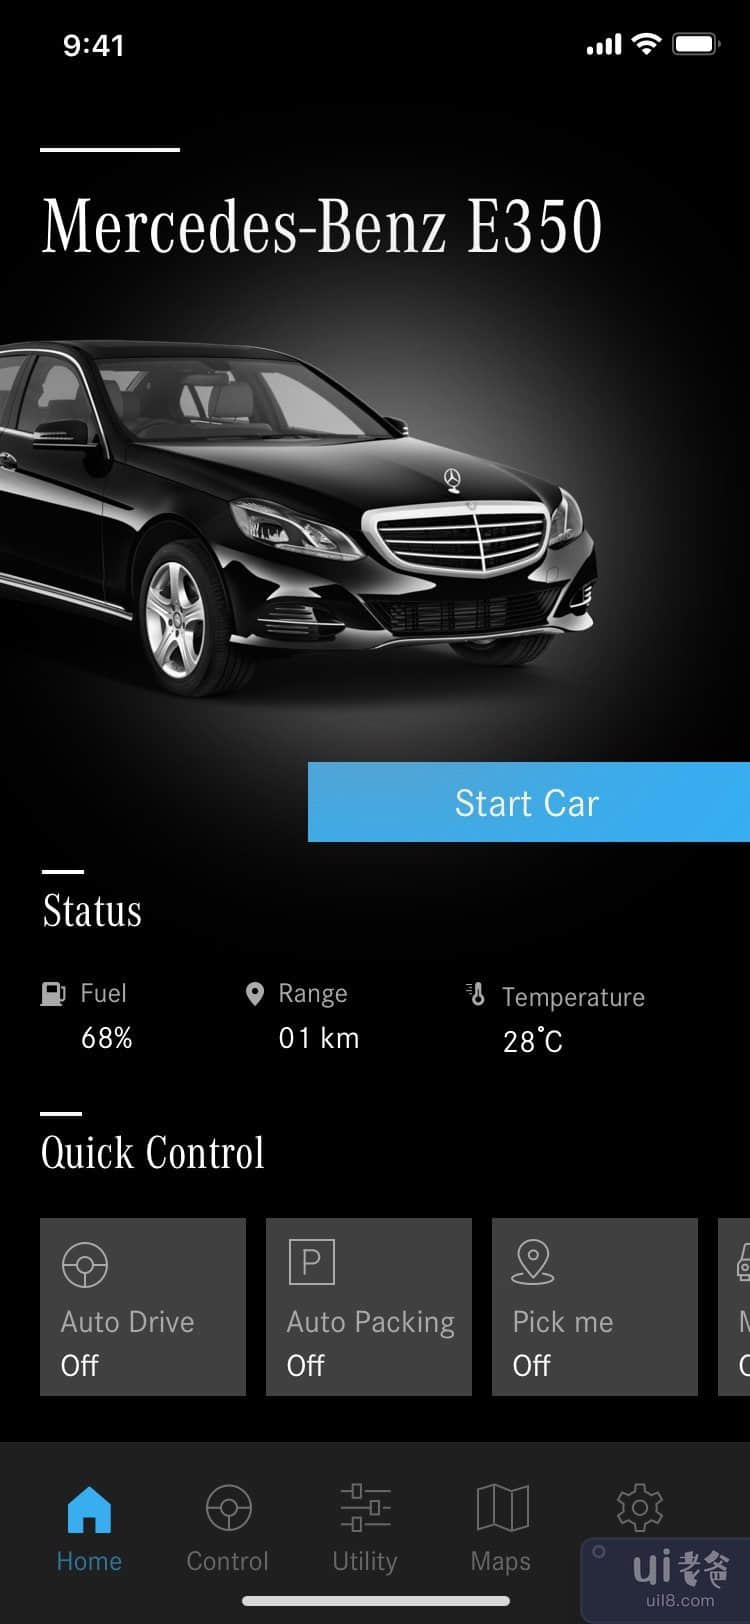 Mex 智能汽车设计应用程序模板概念 #2(Mex Smart Car Design App Template Concept #2)插图